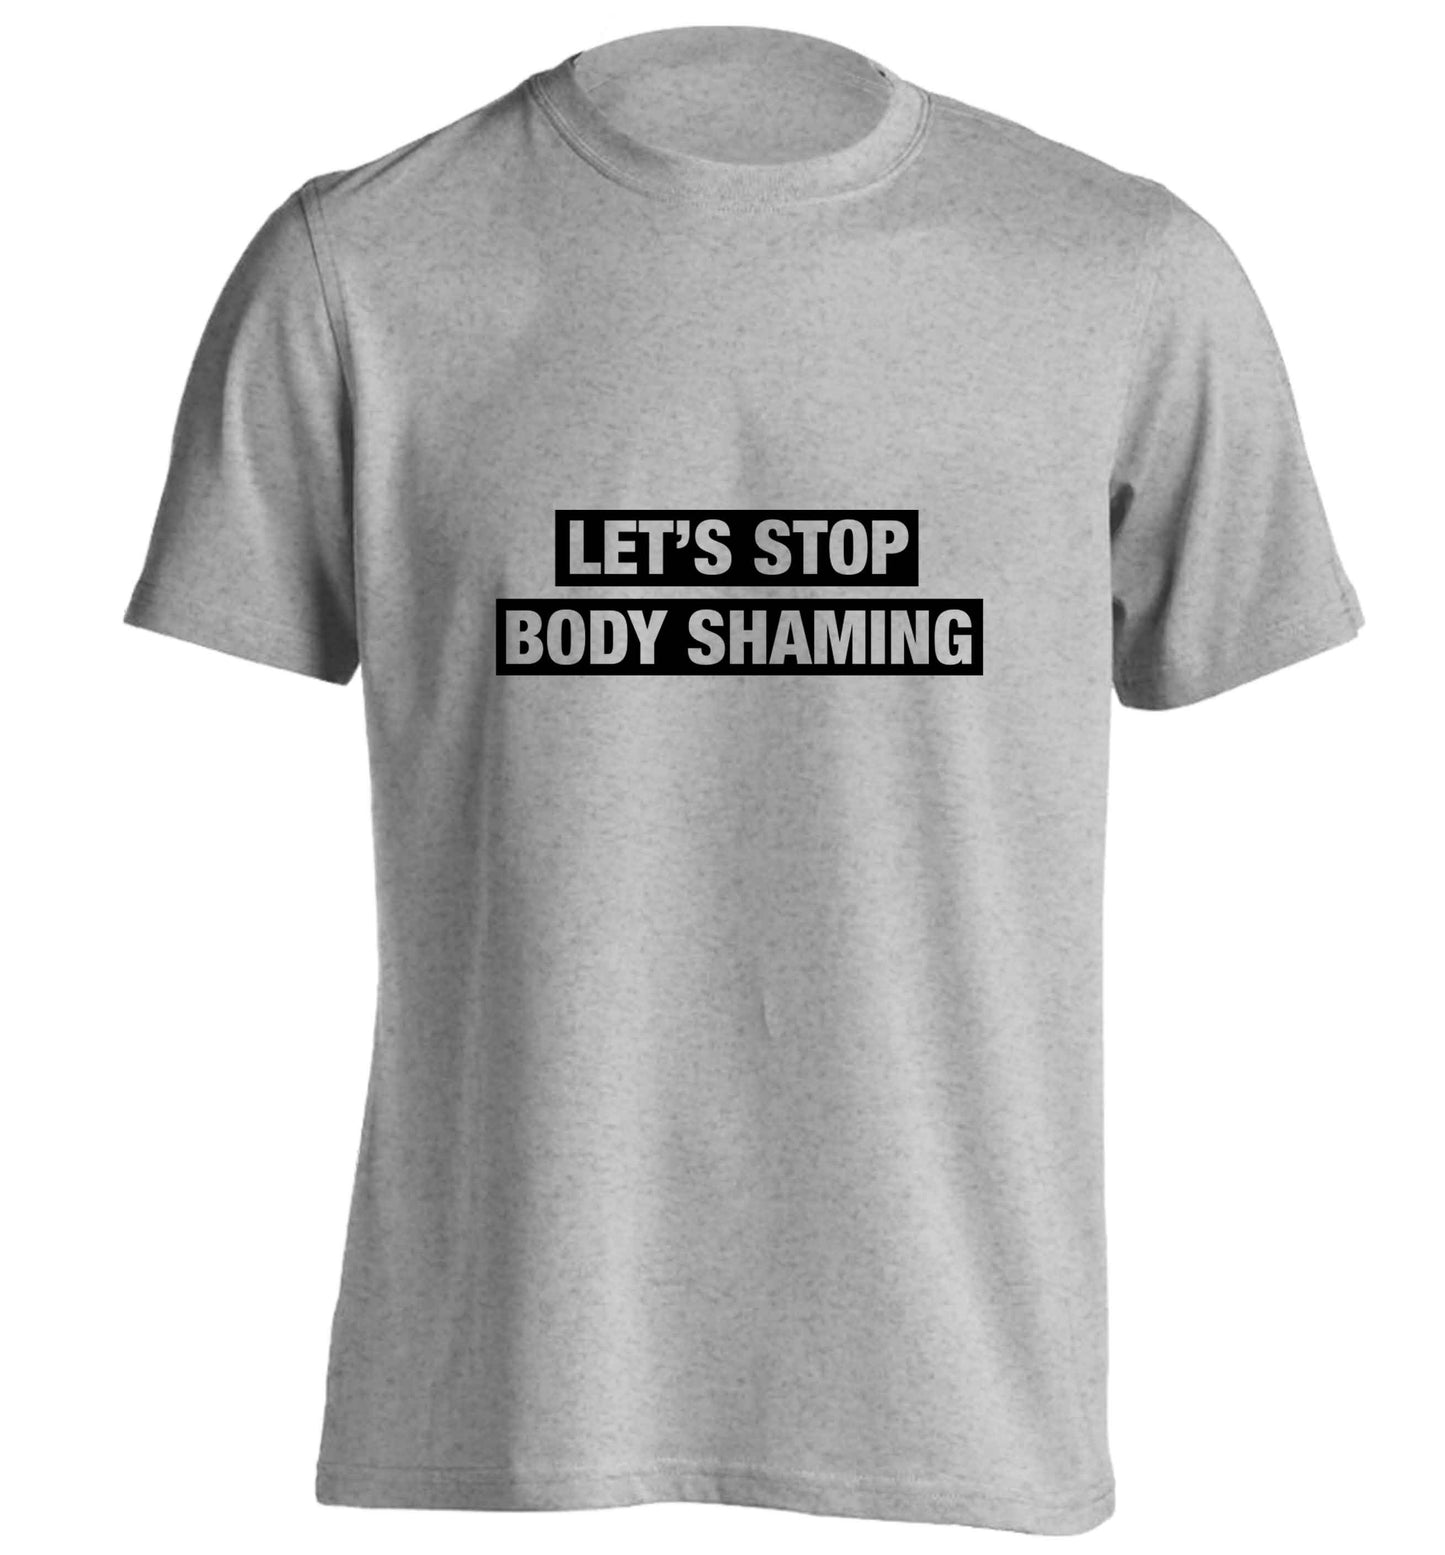 Let's stop body shaming adults unisex grey Tshirt 2XL